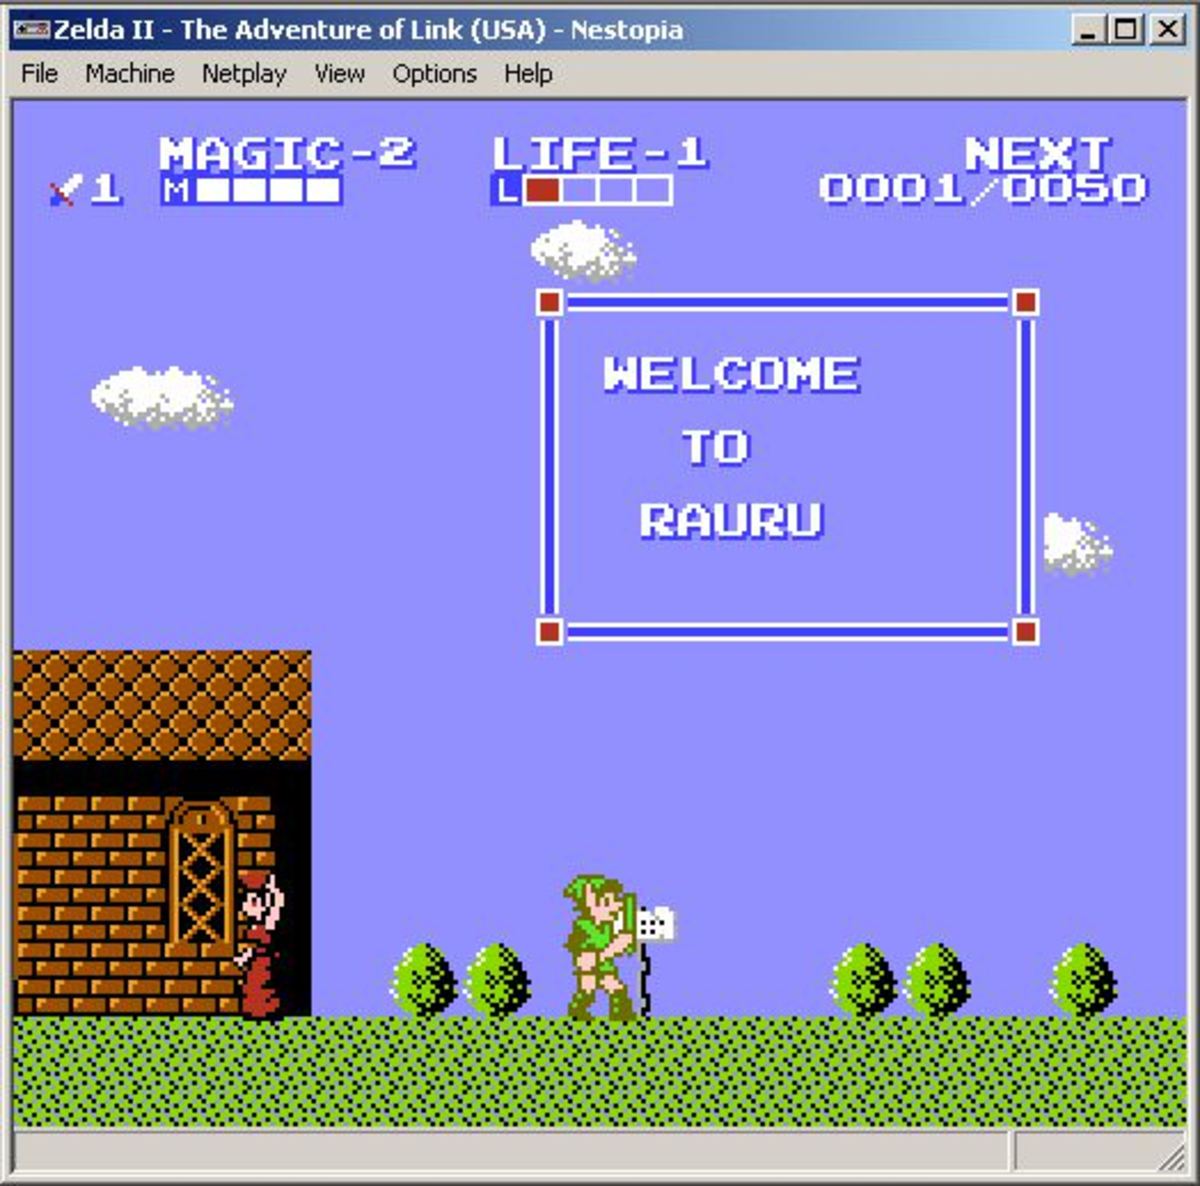 The Legend of Zelda II playing in Nestopia on Windows 7